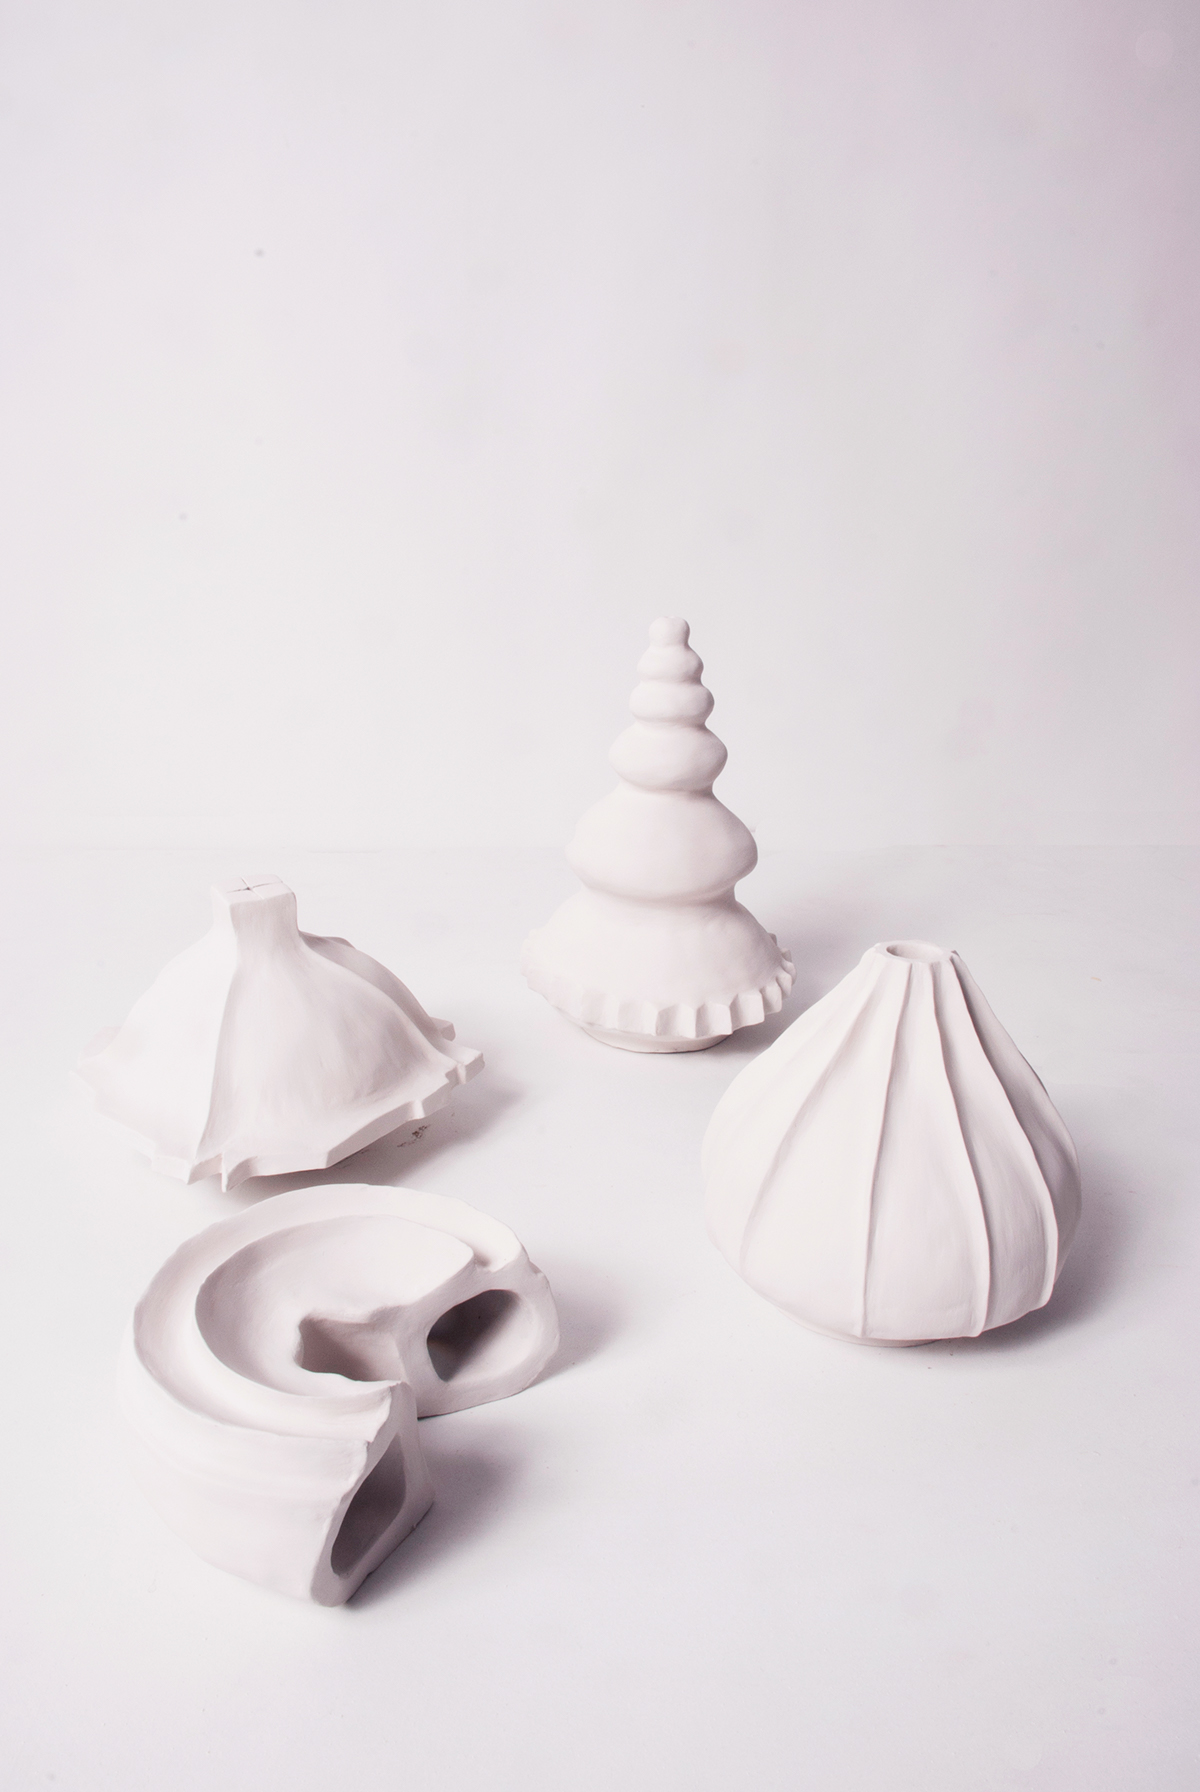 Pottery handmade shape Potentiality evolution